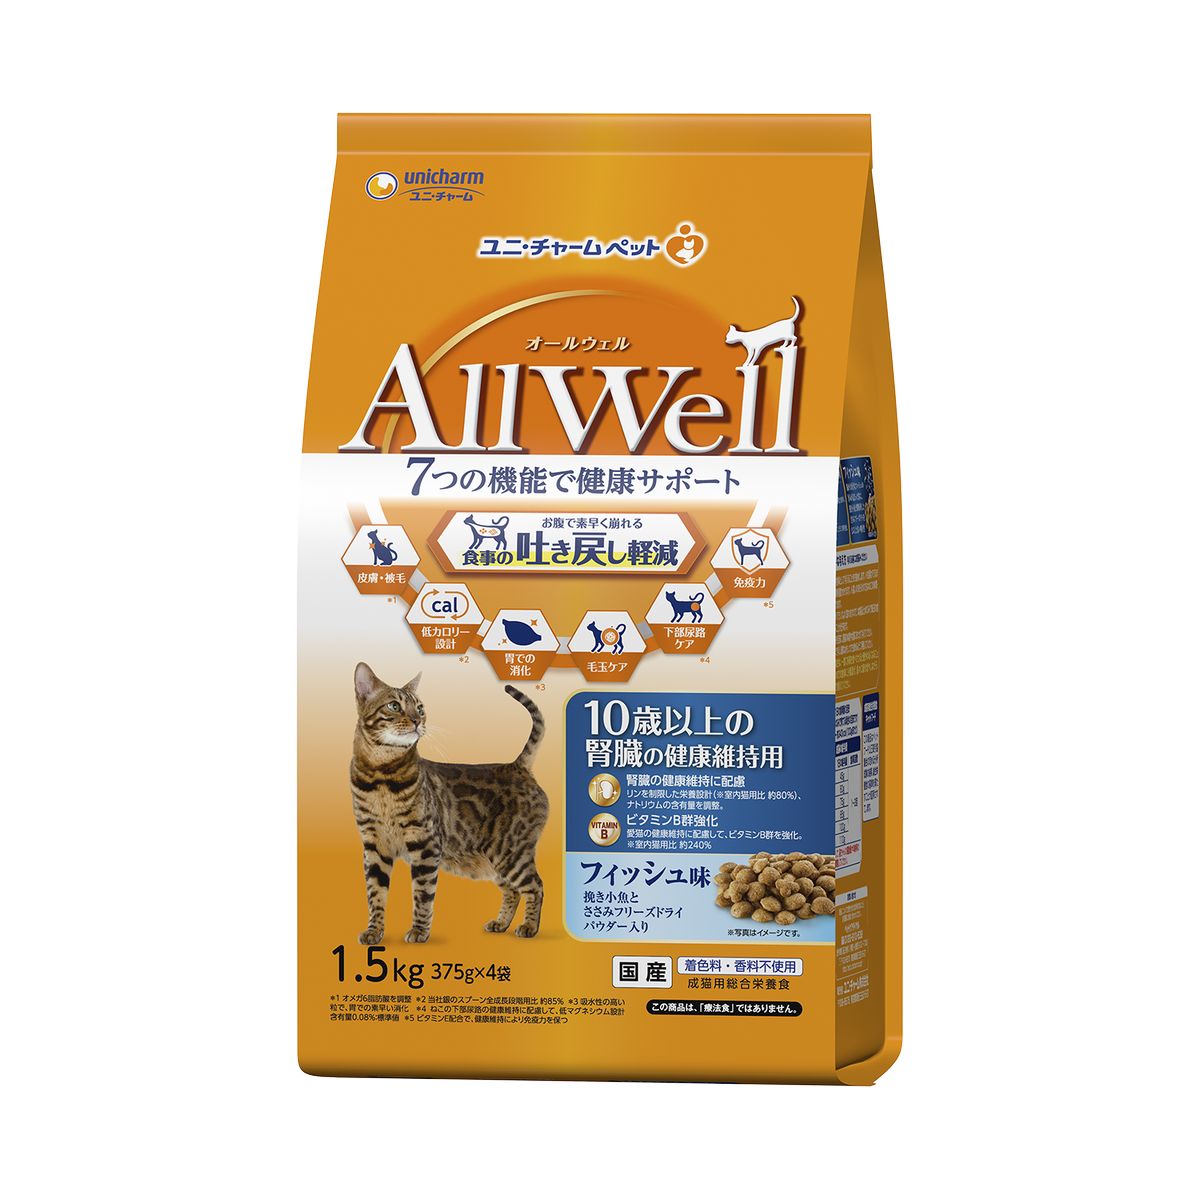 AllWell10歳以上の腎臓の健康維持用フィッシュ味挽き小魚とささみフリーズドライパウダー入り1.5kg×5